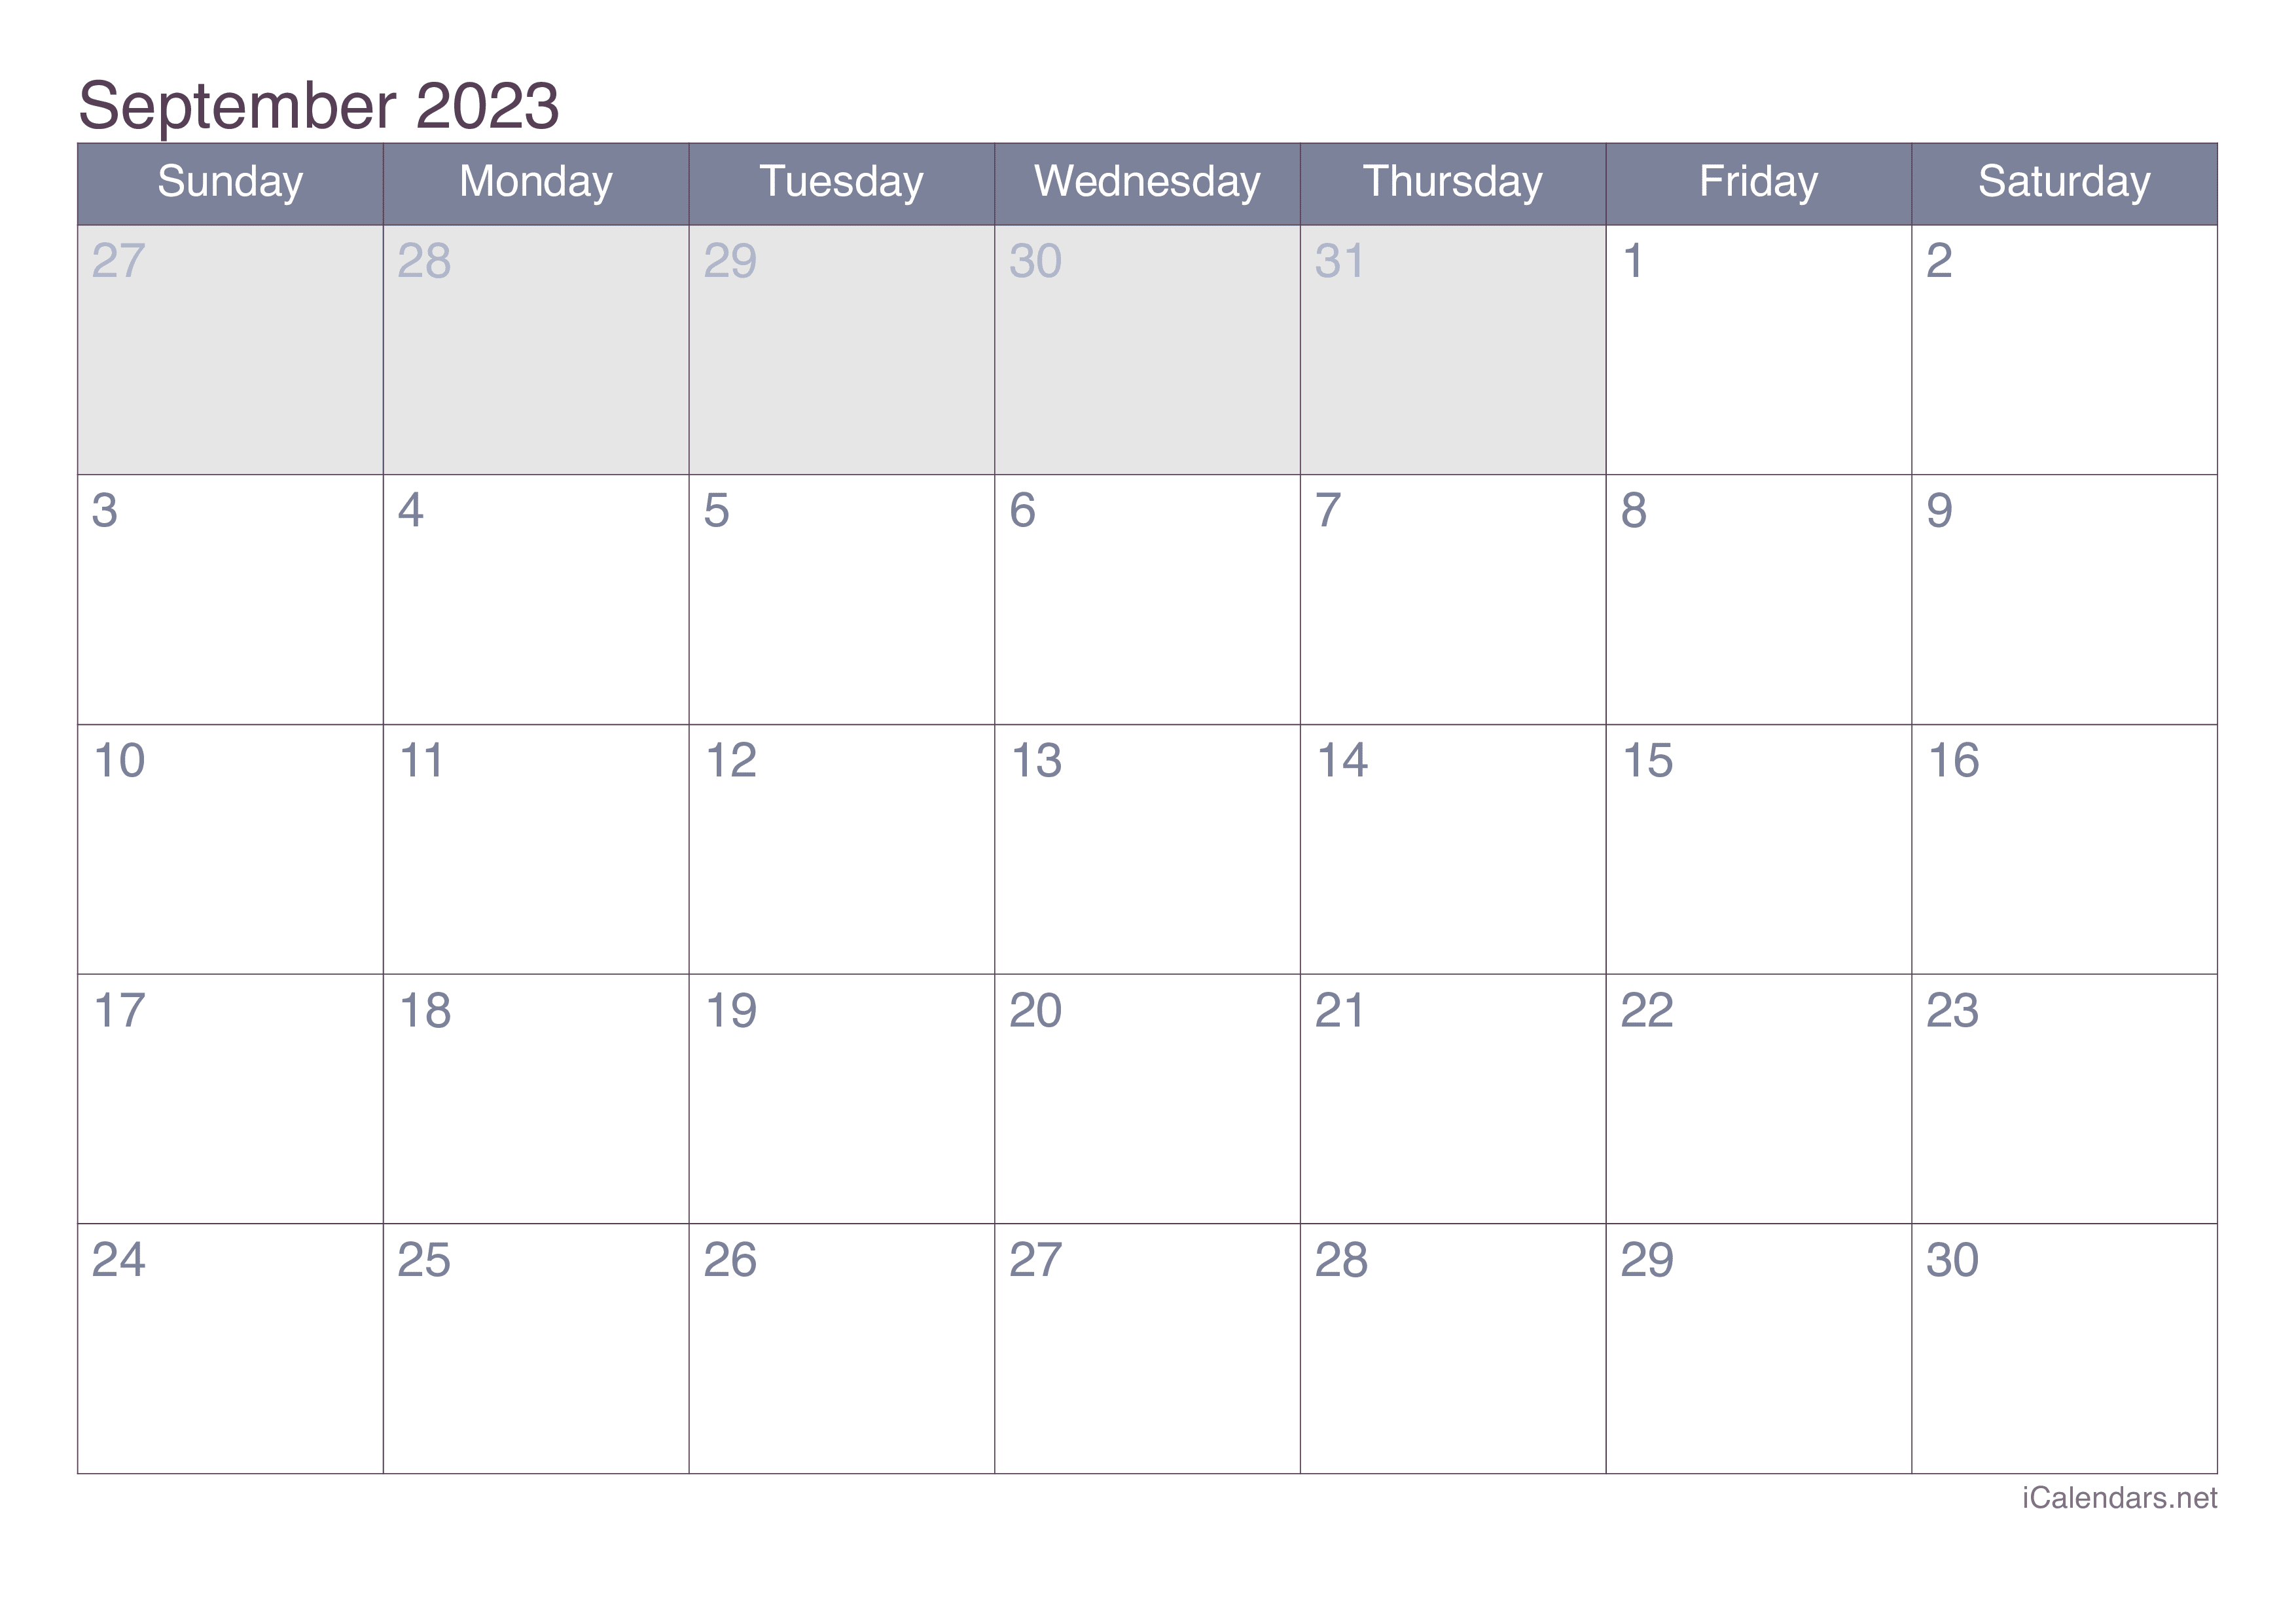 kalender-september-2023-als-word-vorlagen-vrogue